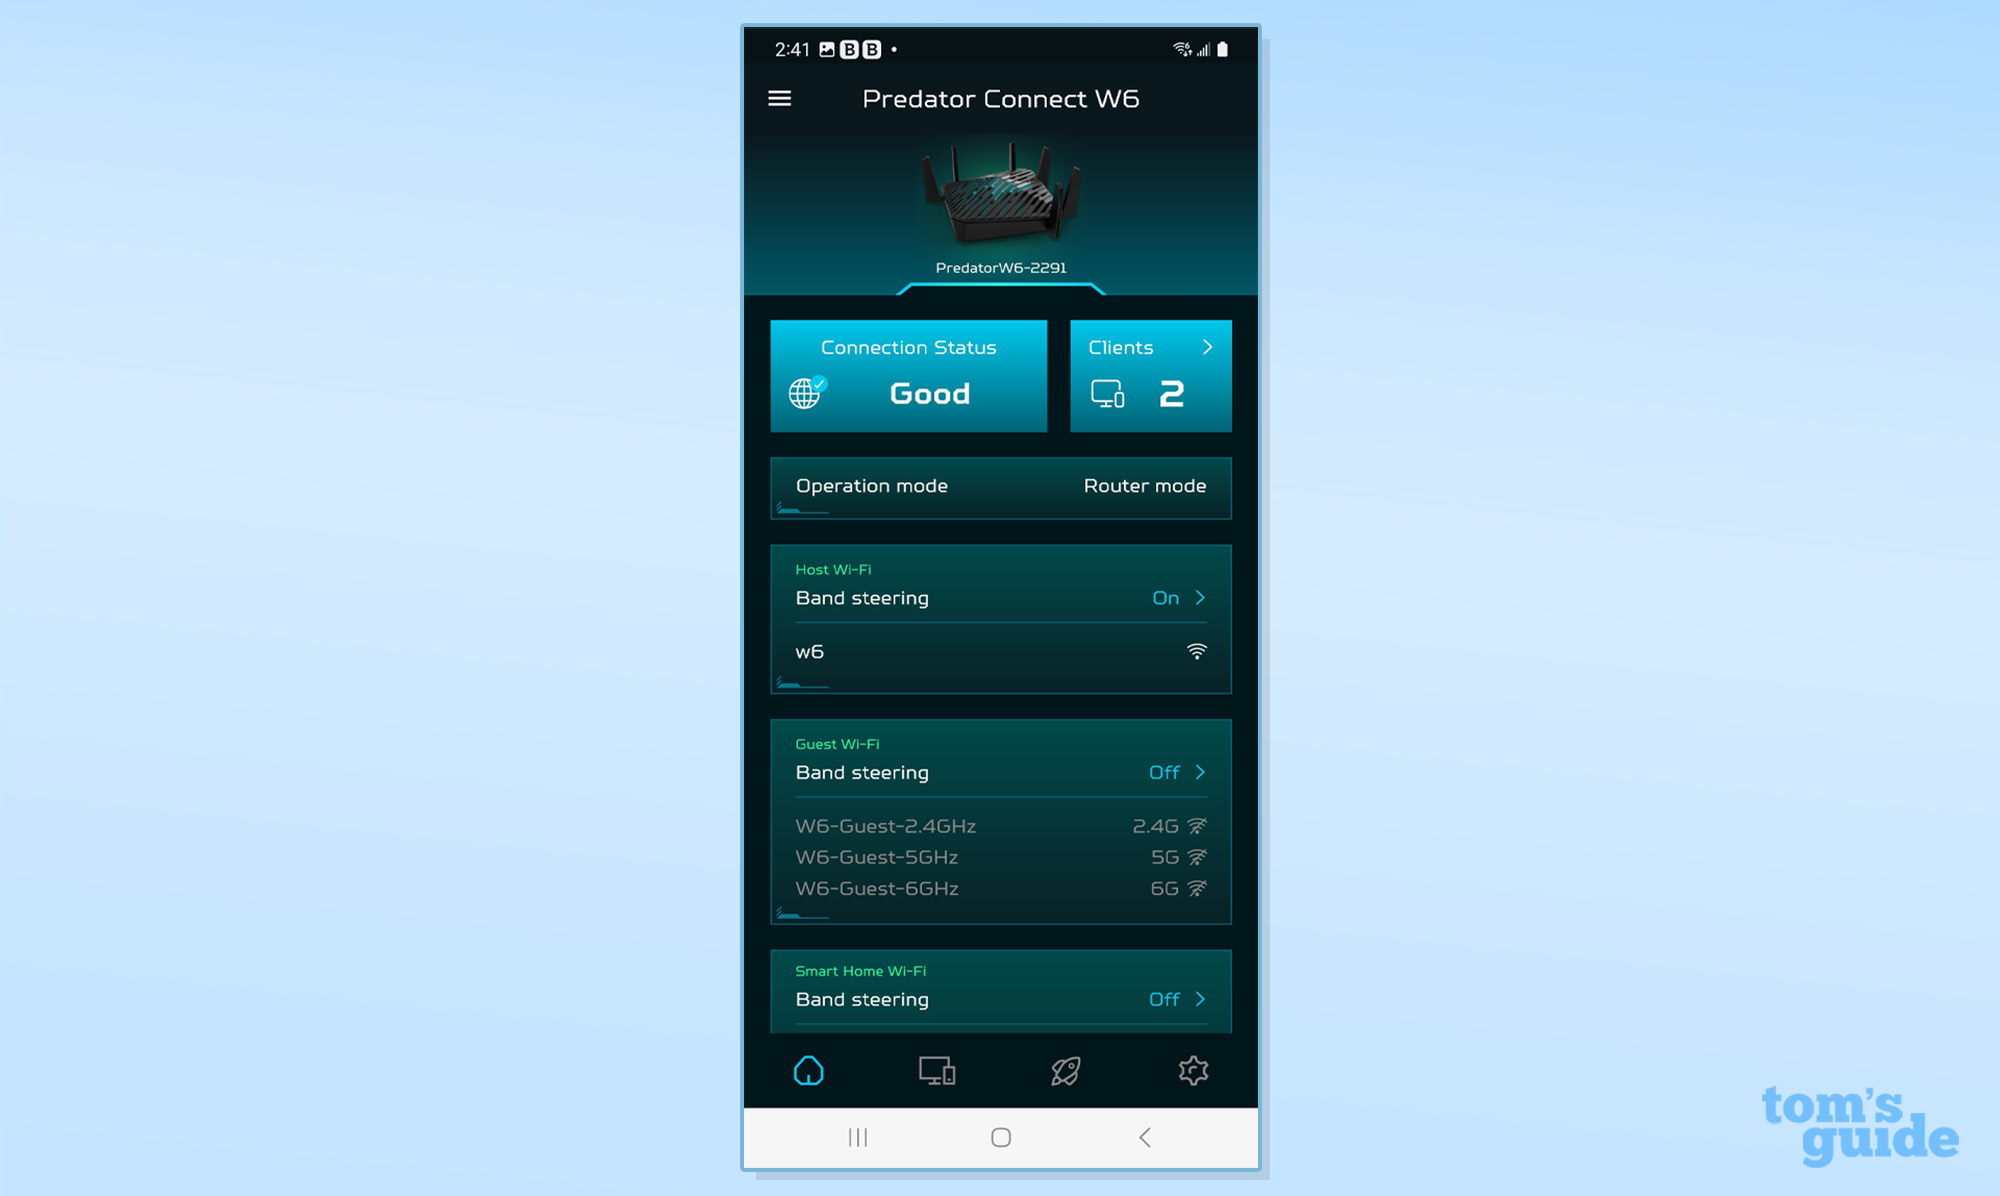 Acer Predator Connect W6 app screen shot